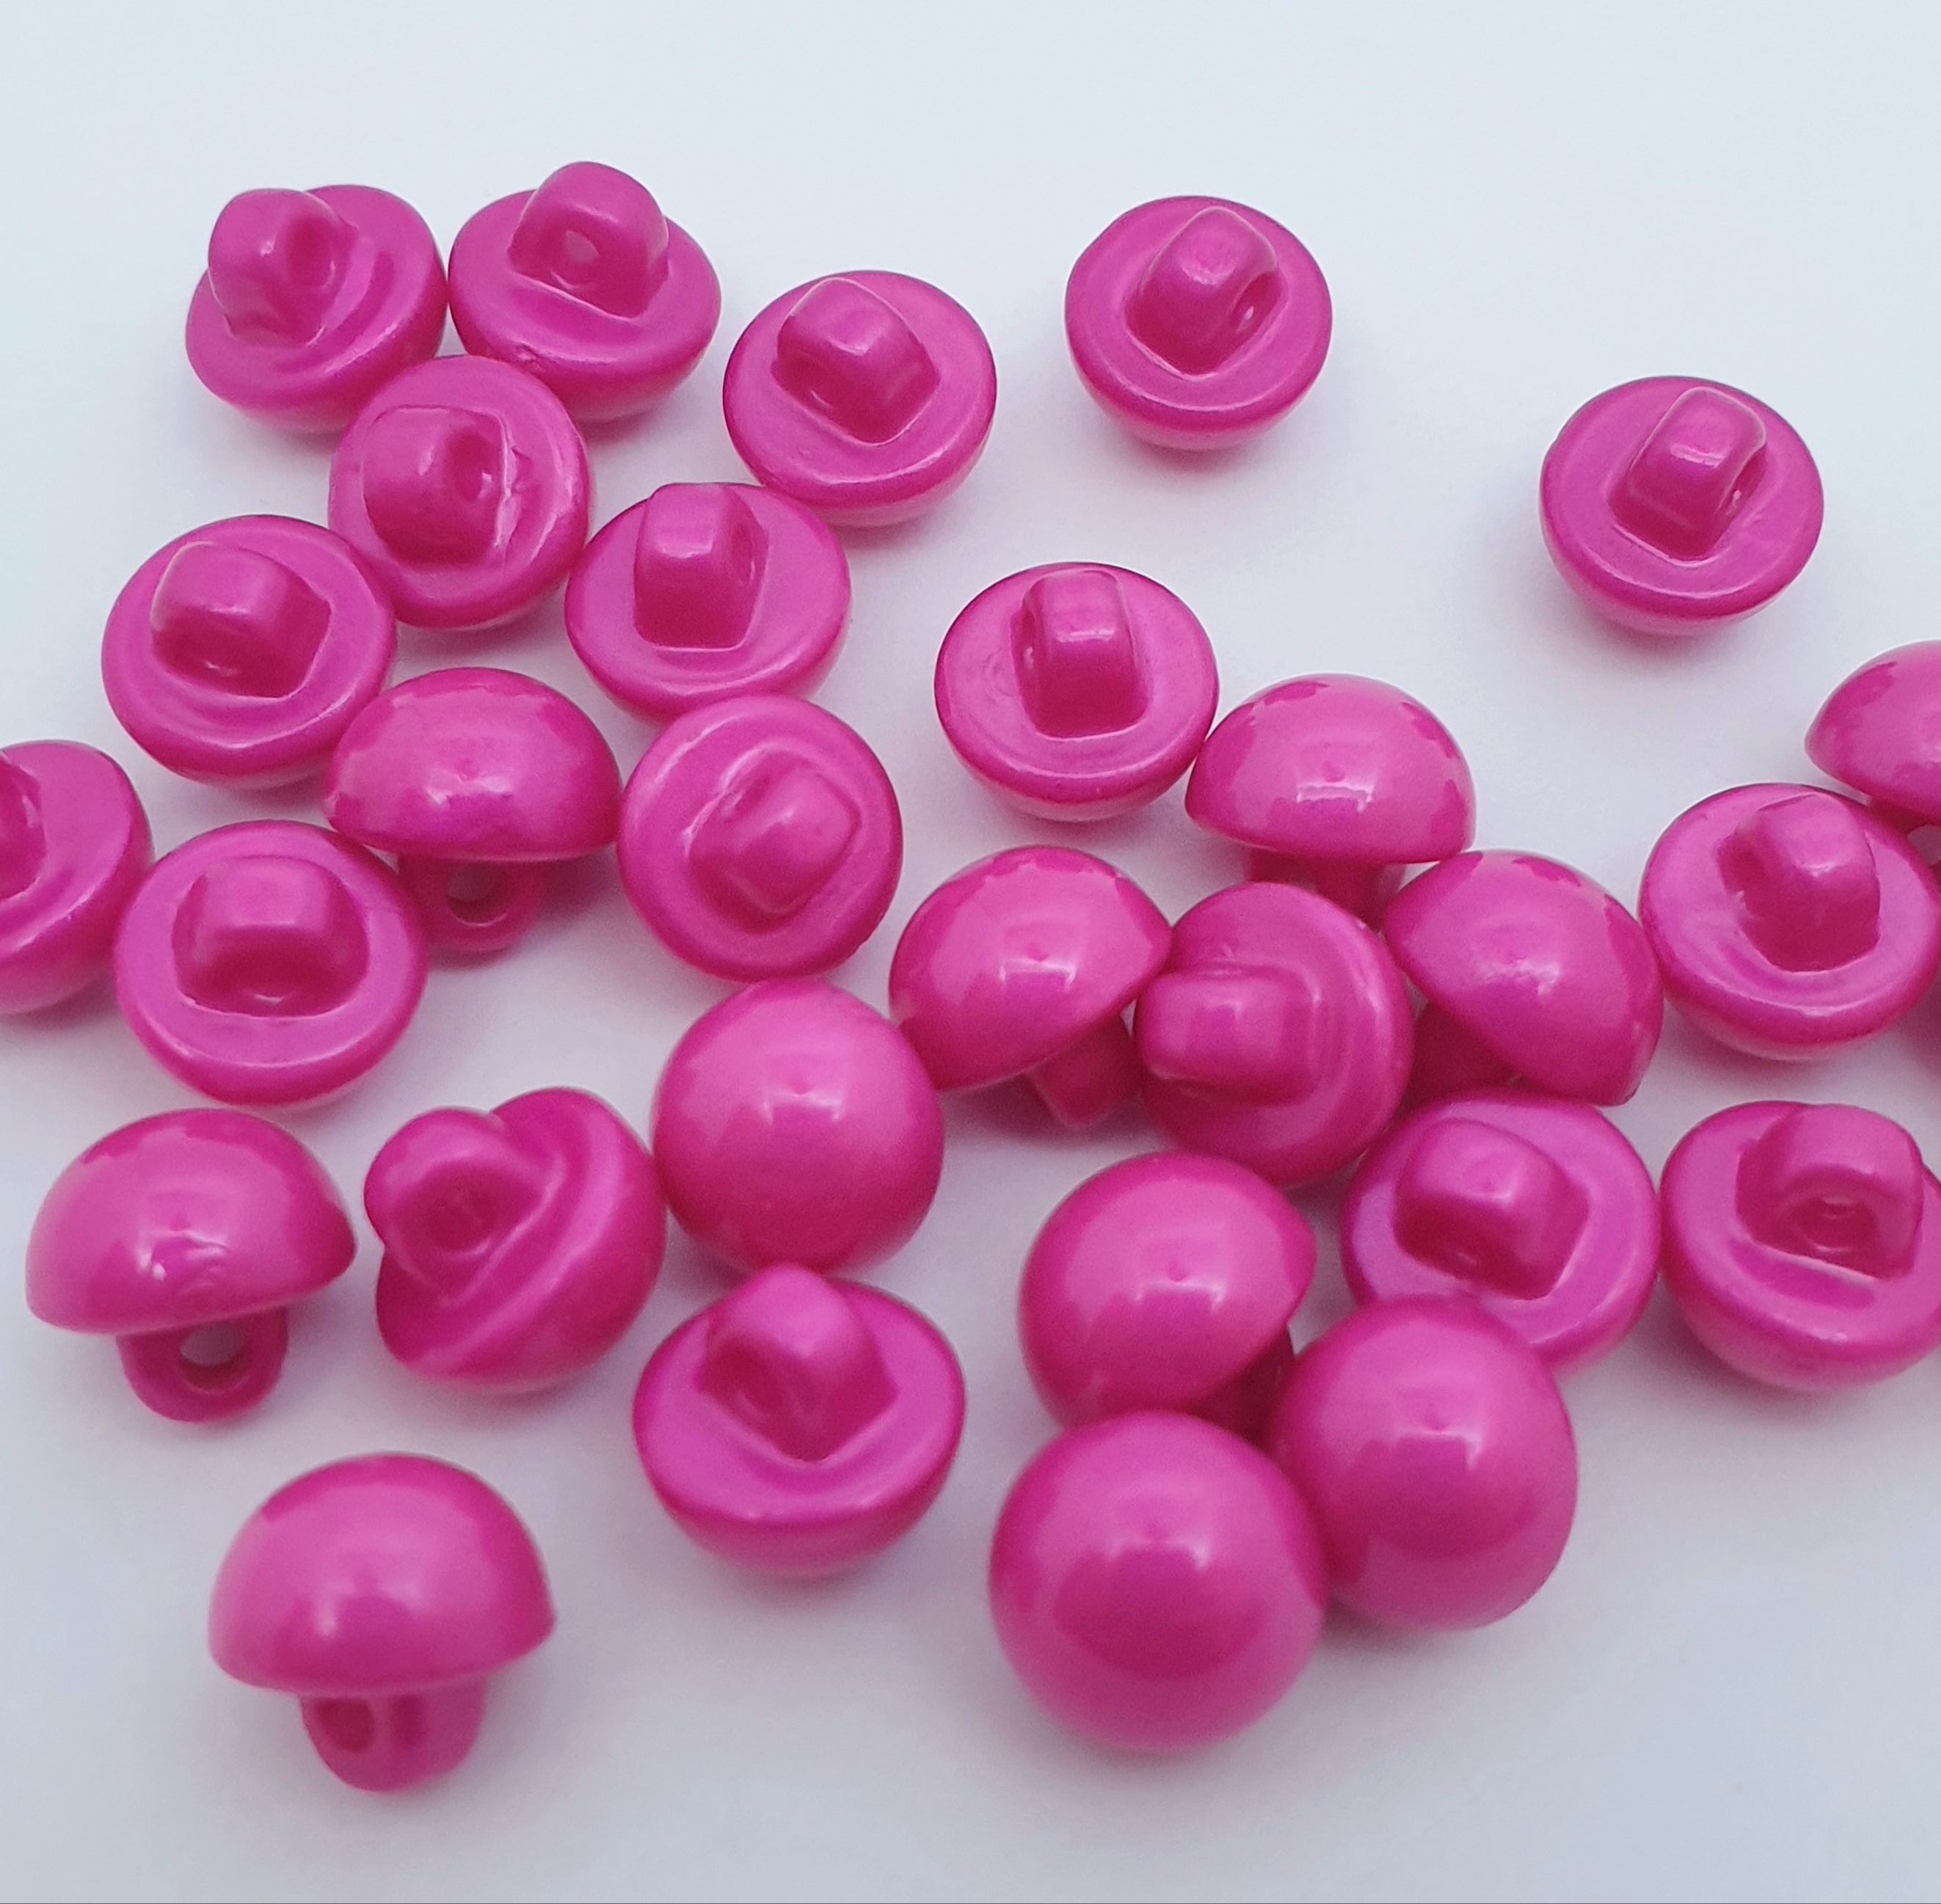 MajorCrafts 30pcs 8mm Dark Pink High-Grade Acrylic Small Round Sewing Mushroom Shank Buttons